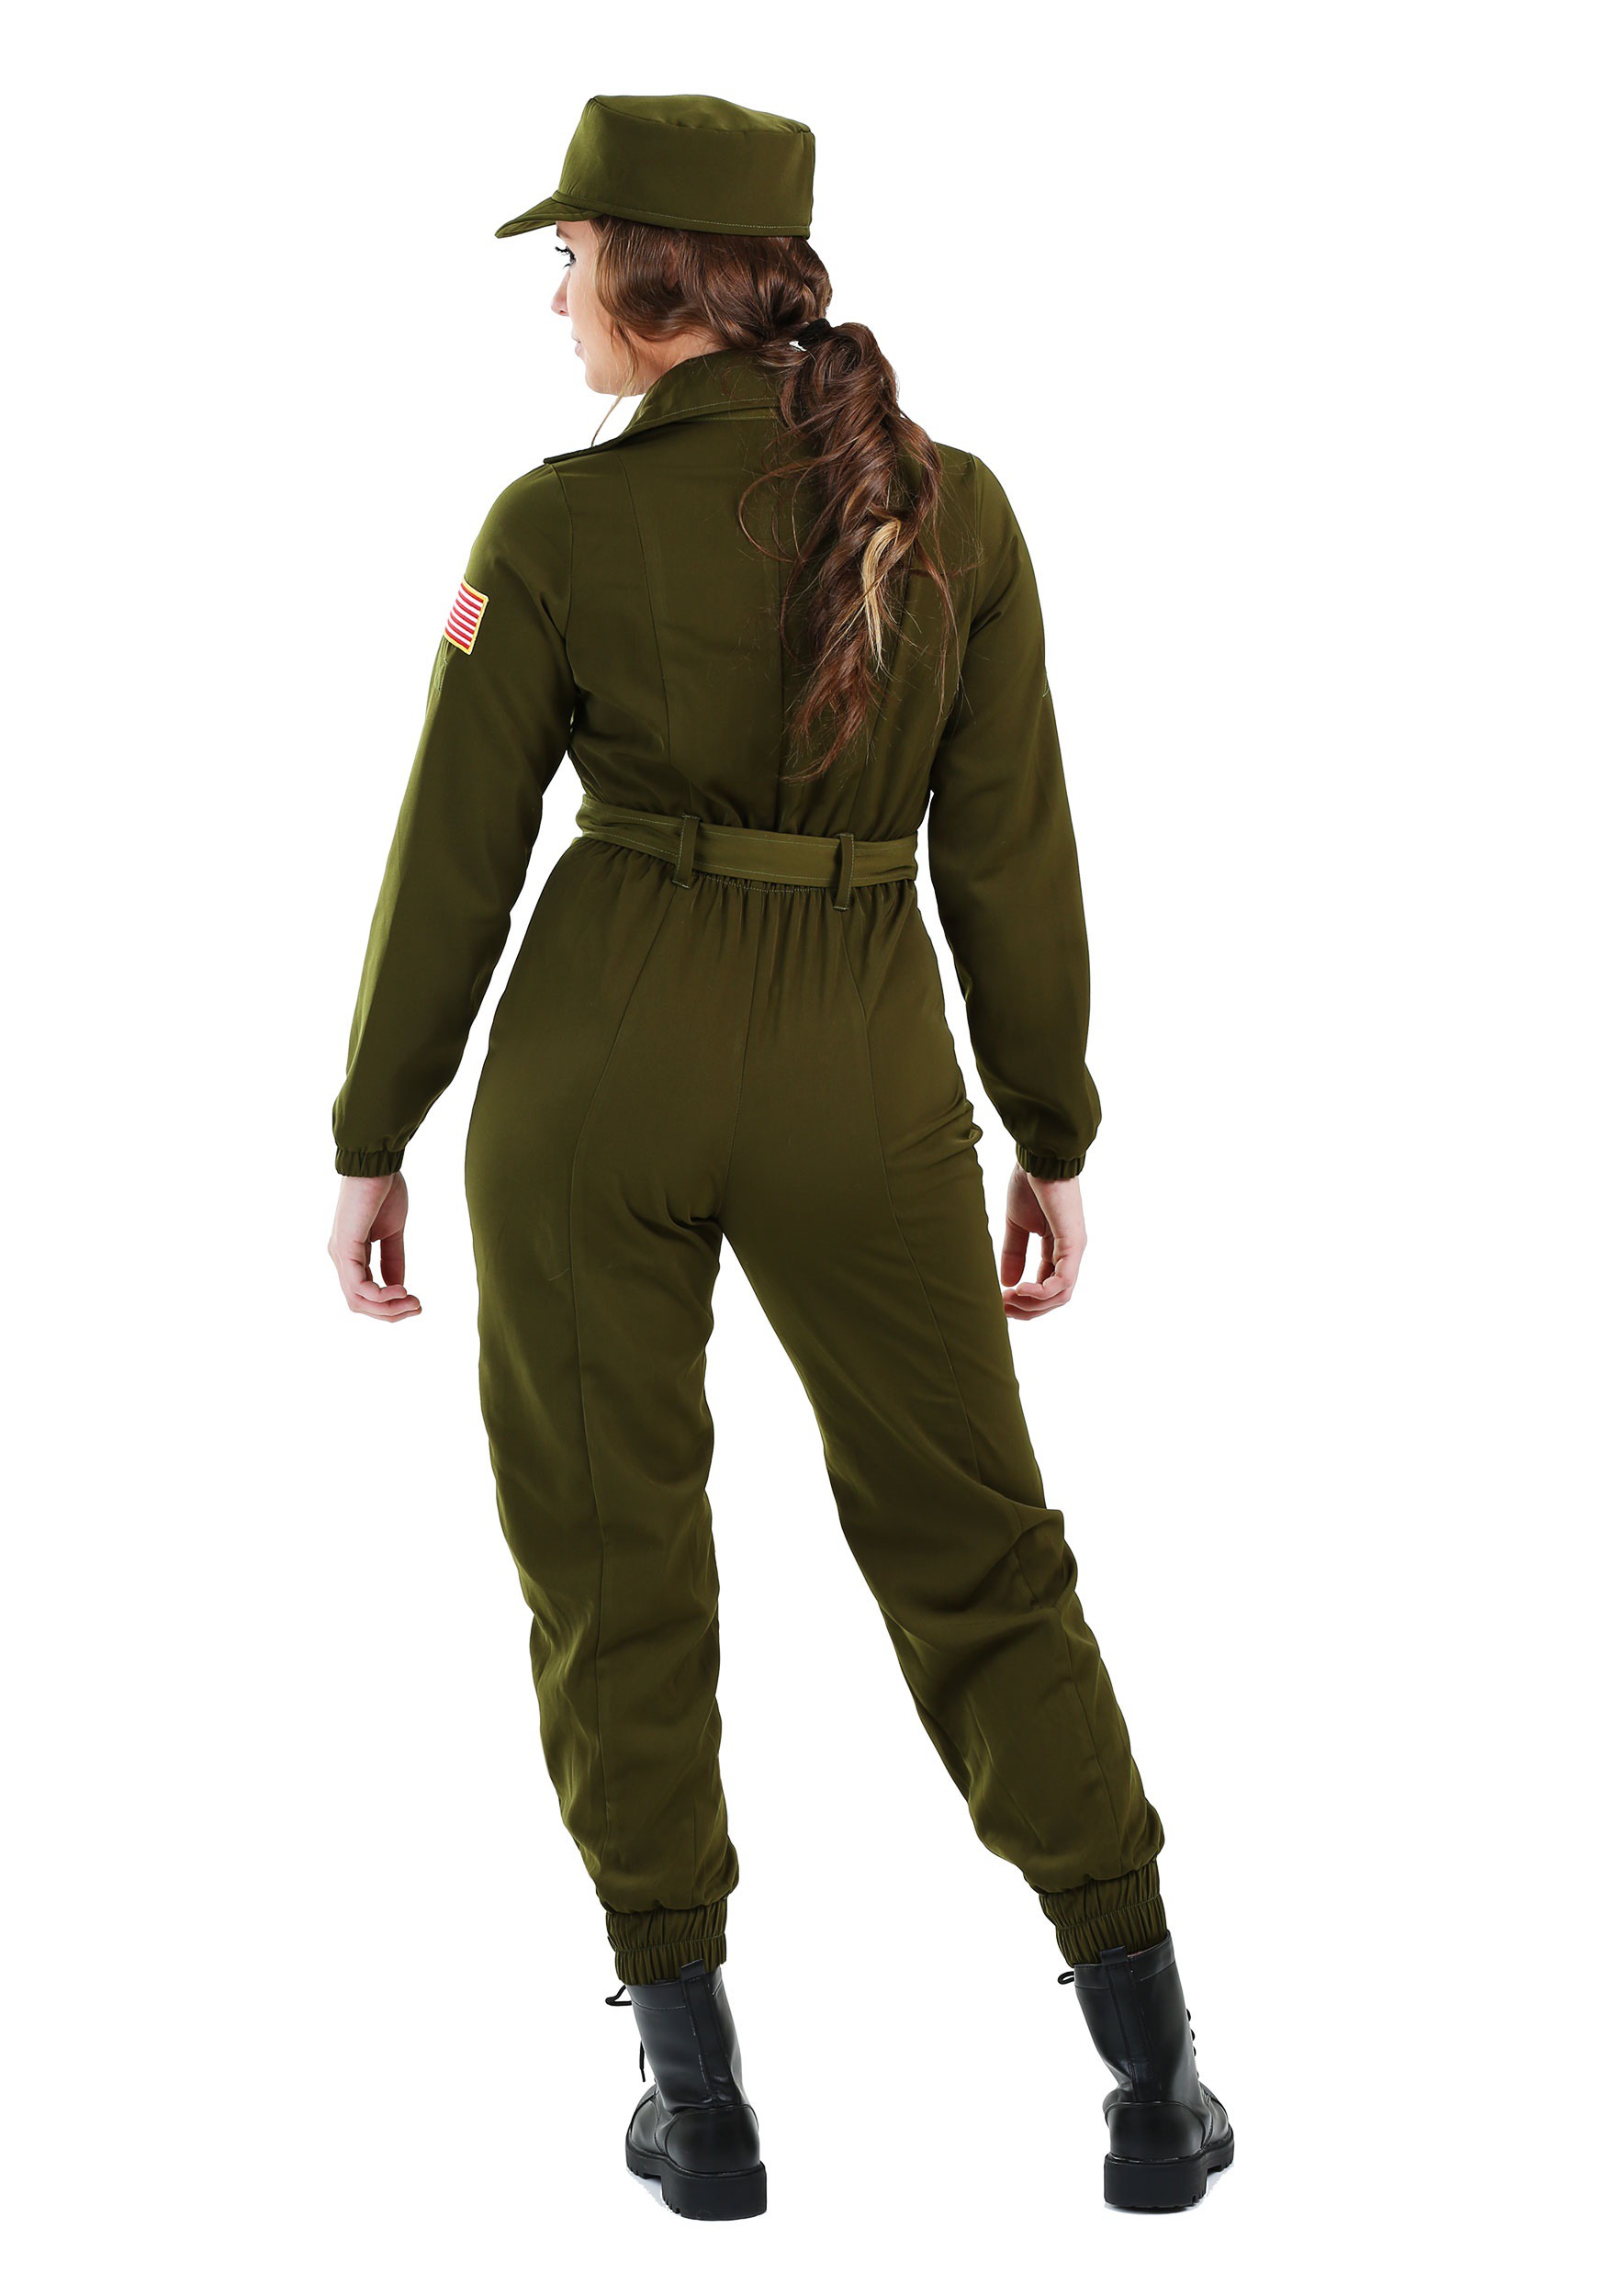 Women's Plus Size Army Flightsuit Costume